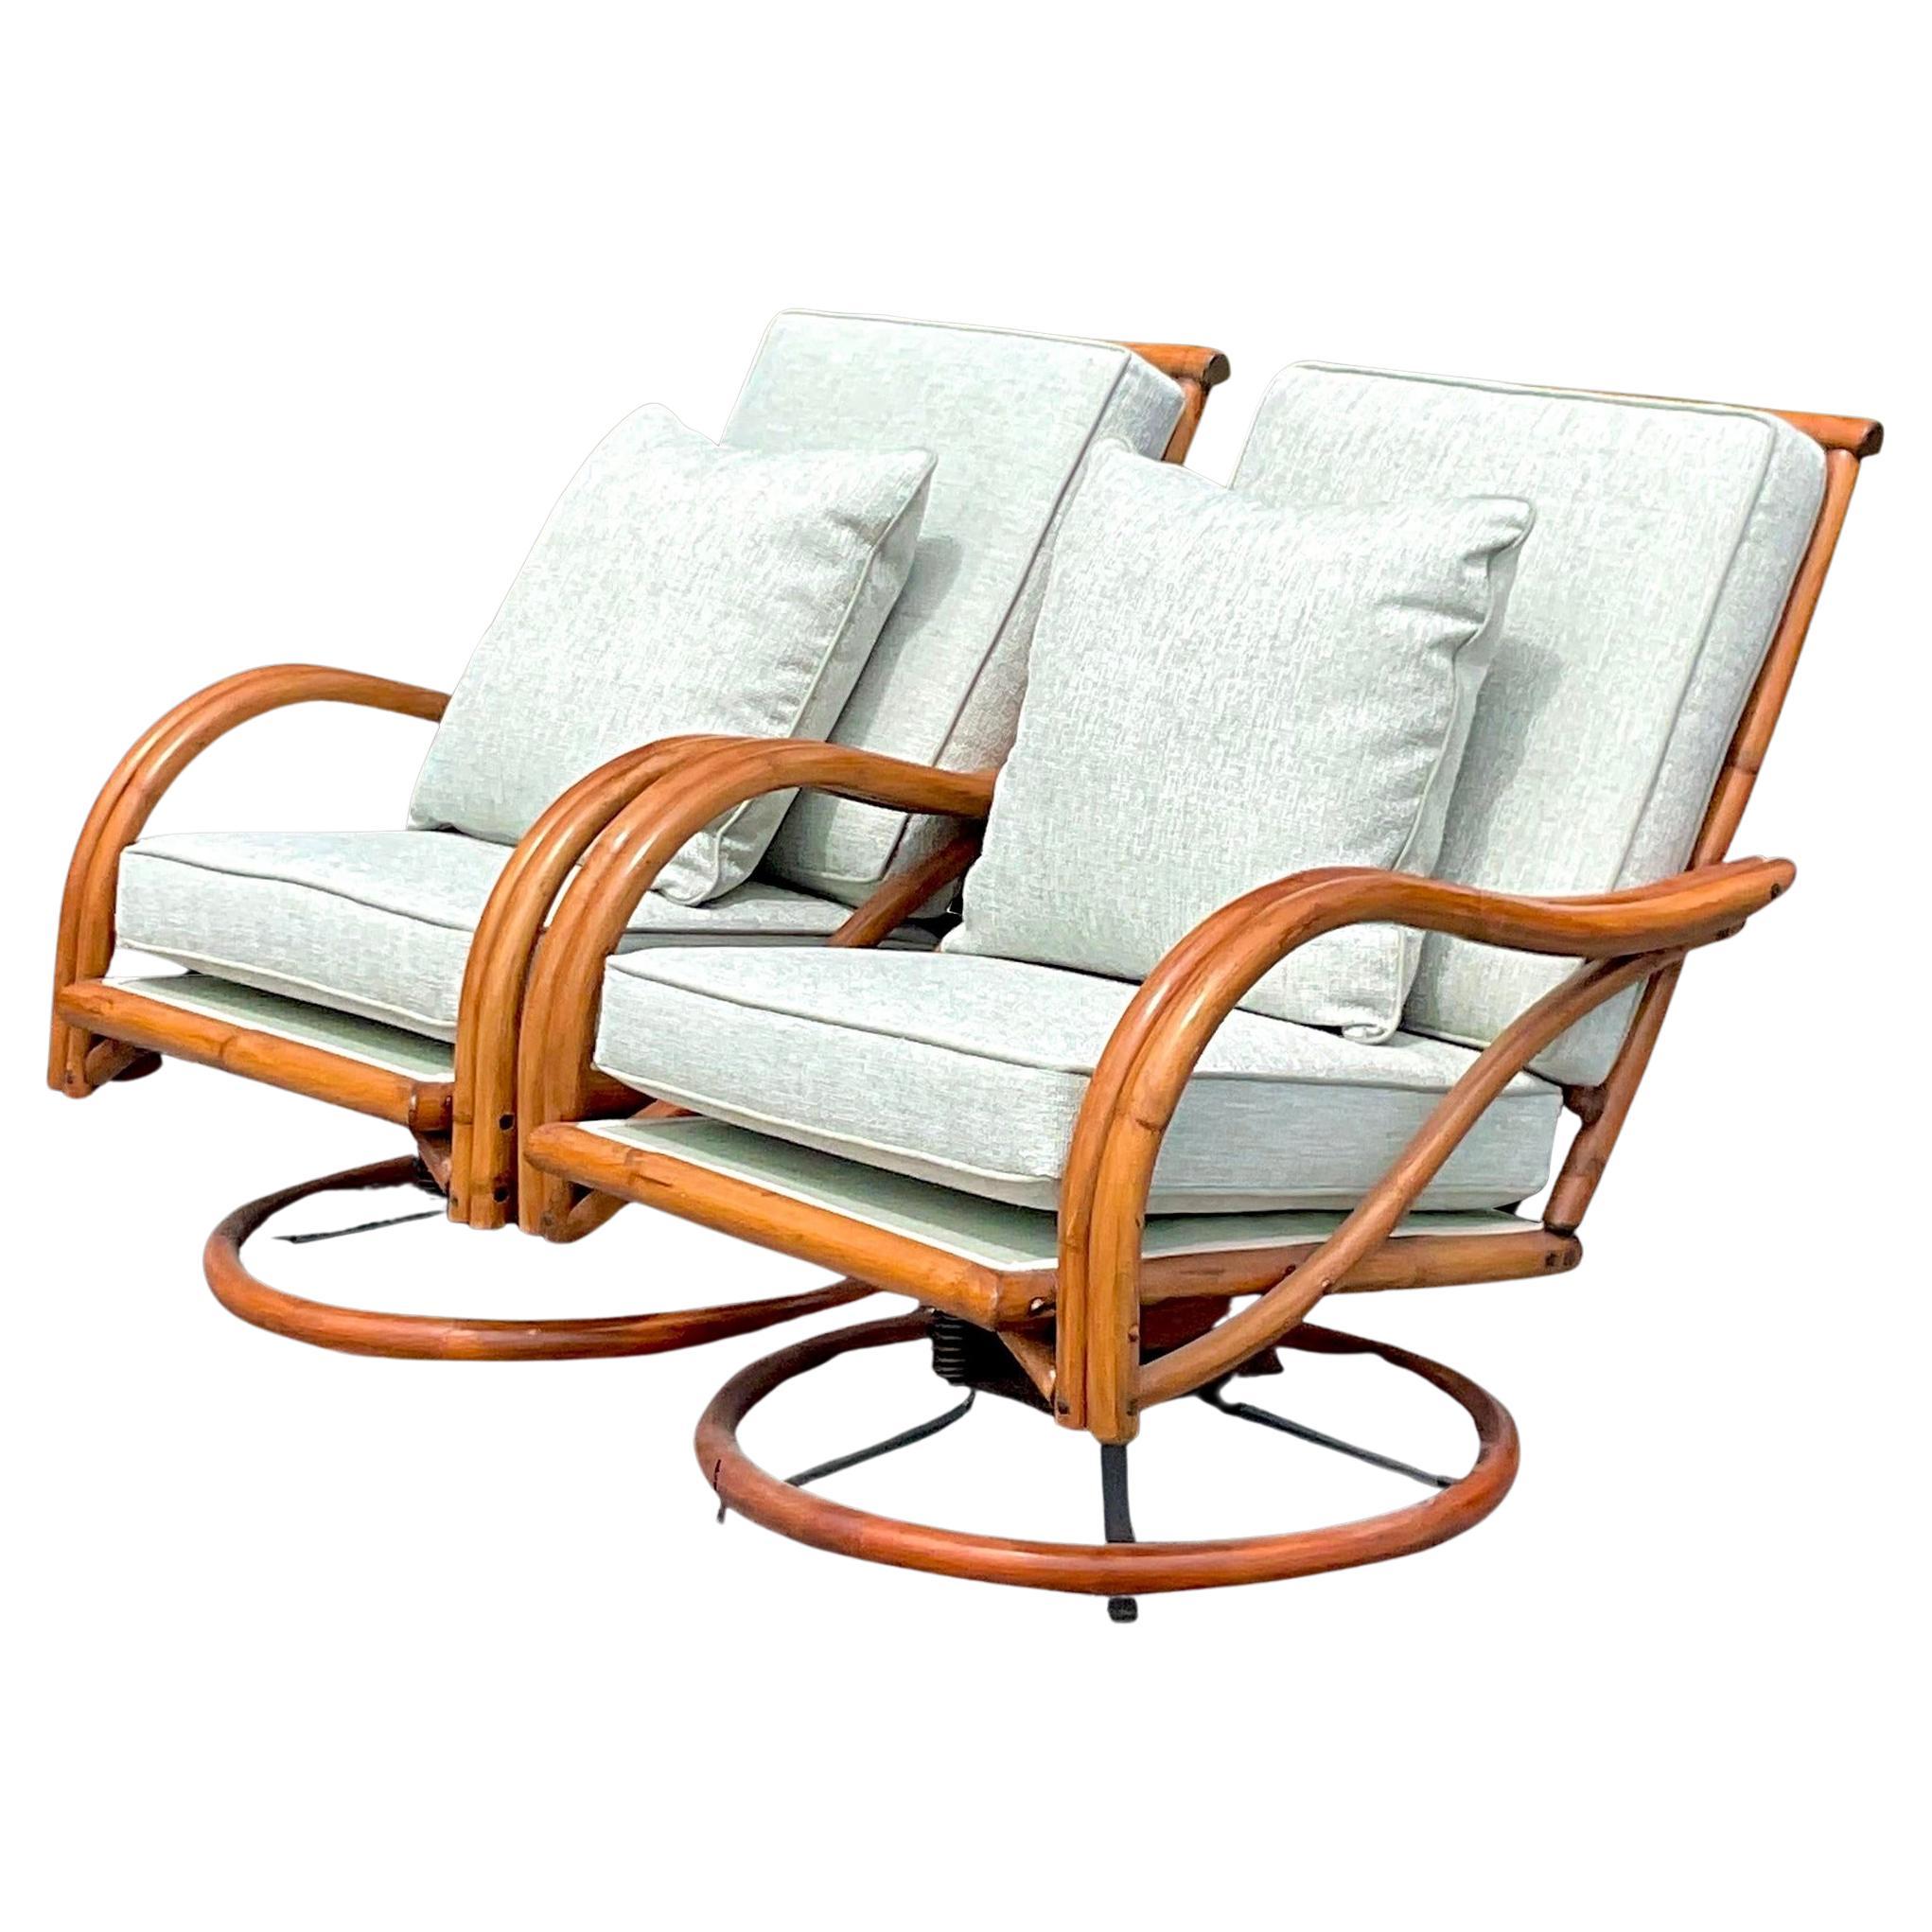 Mid-20th Century Vintage Coastal Bent Rattan Swivel Chairs - a Pair